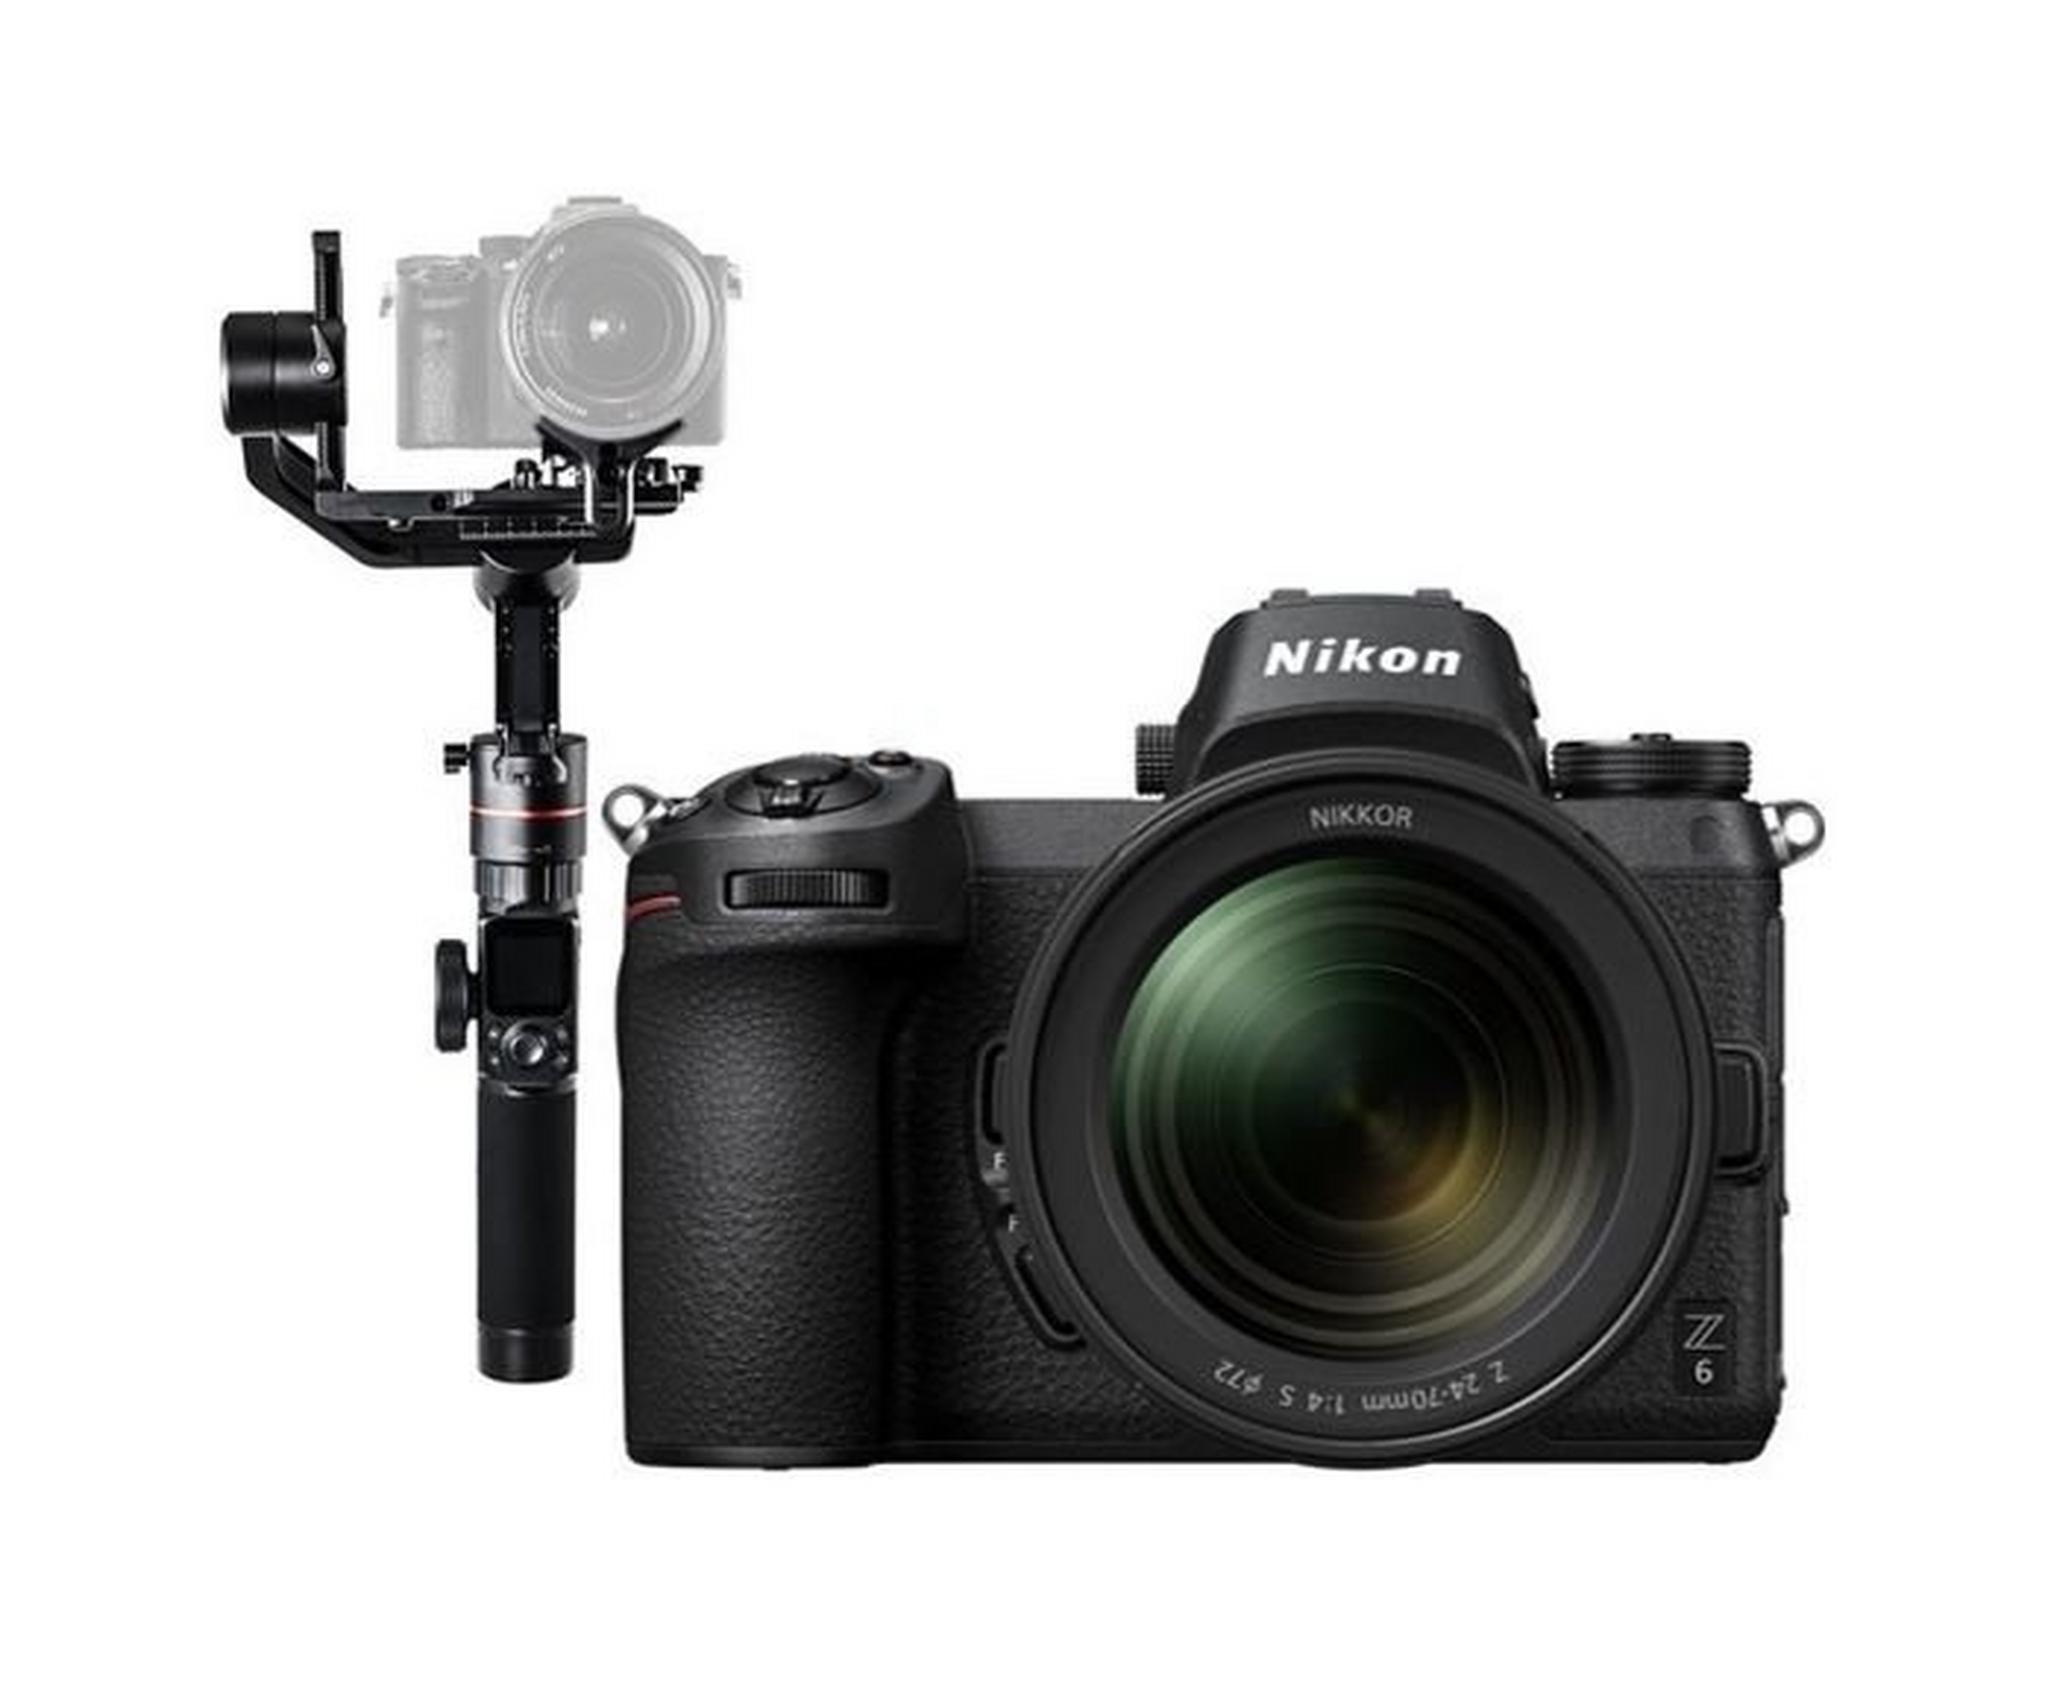 Nikon Z 6 Mirrorless Digital Camera With 24-70mm Lens + FeiyuTech AK2000 Wi-Fi Gimbal Stabilizer